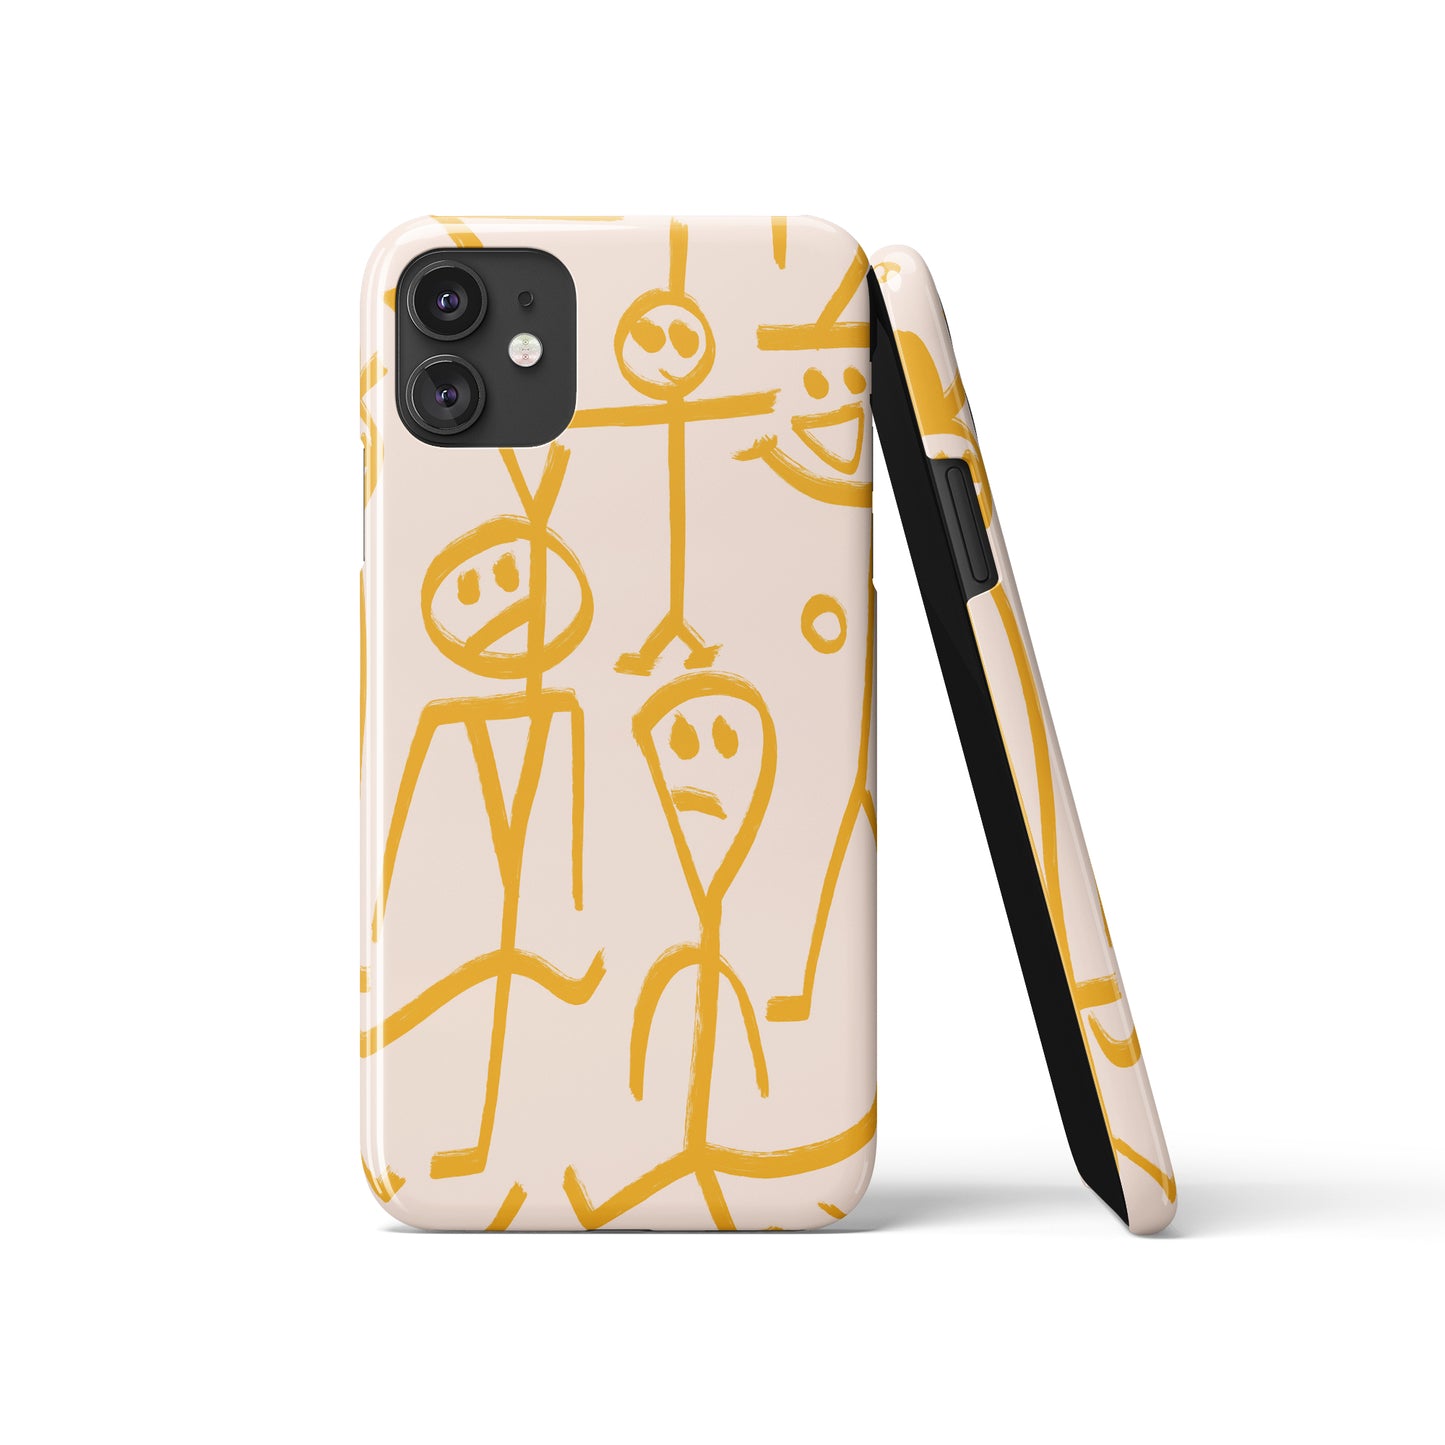 Cavemen Drawings iPhone Case